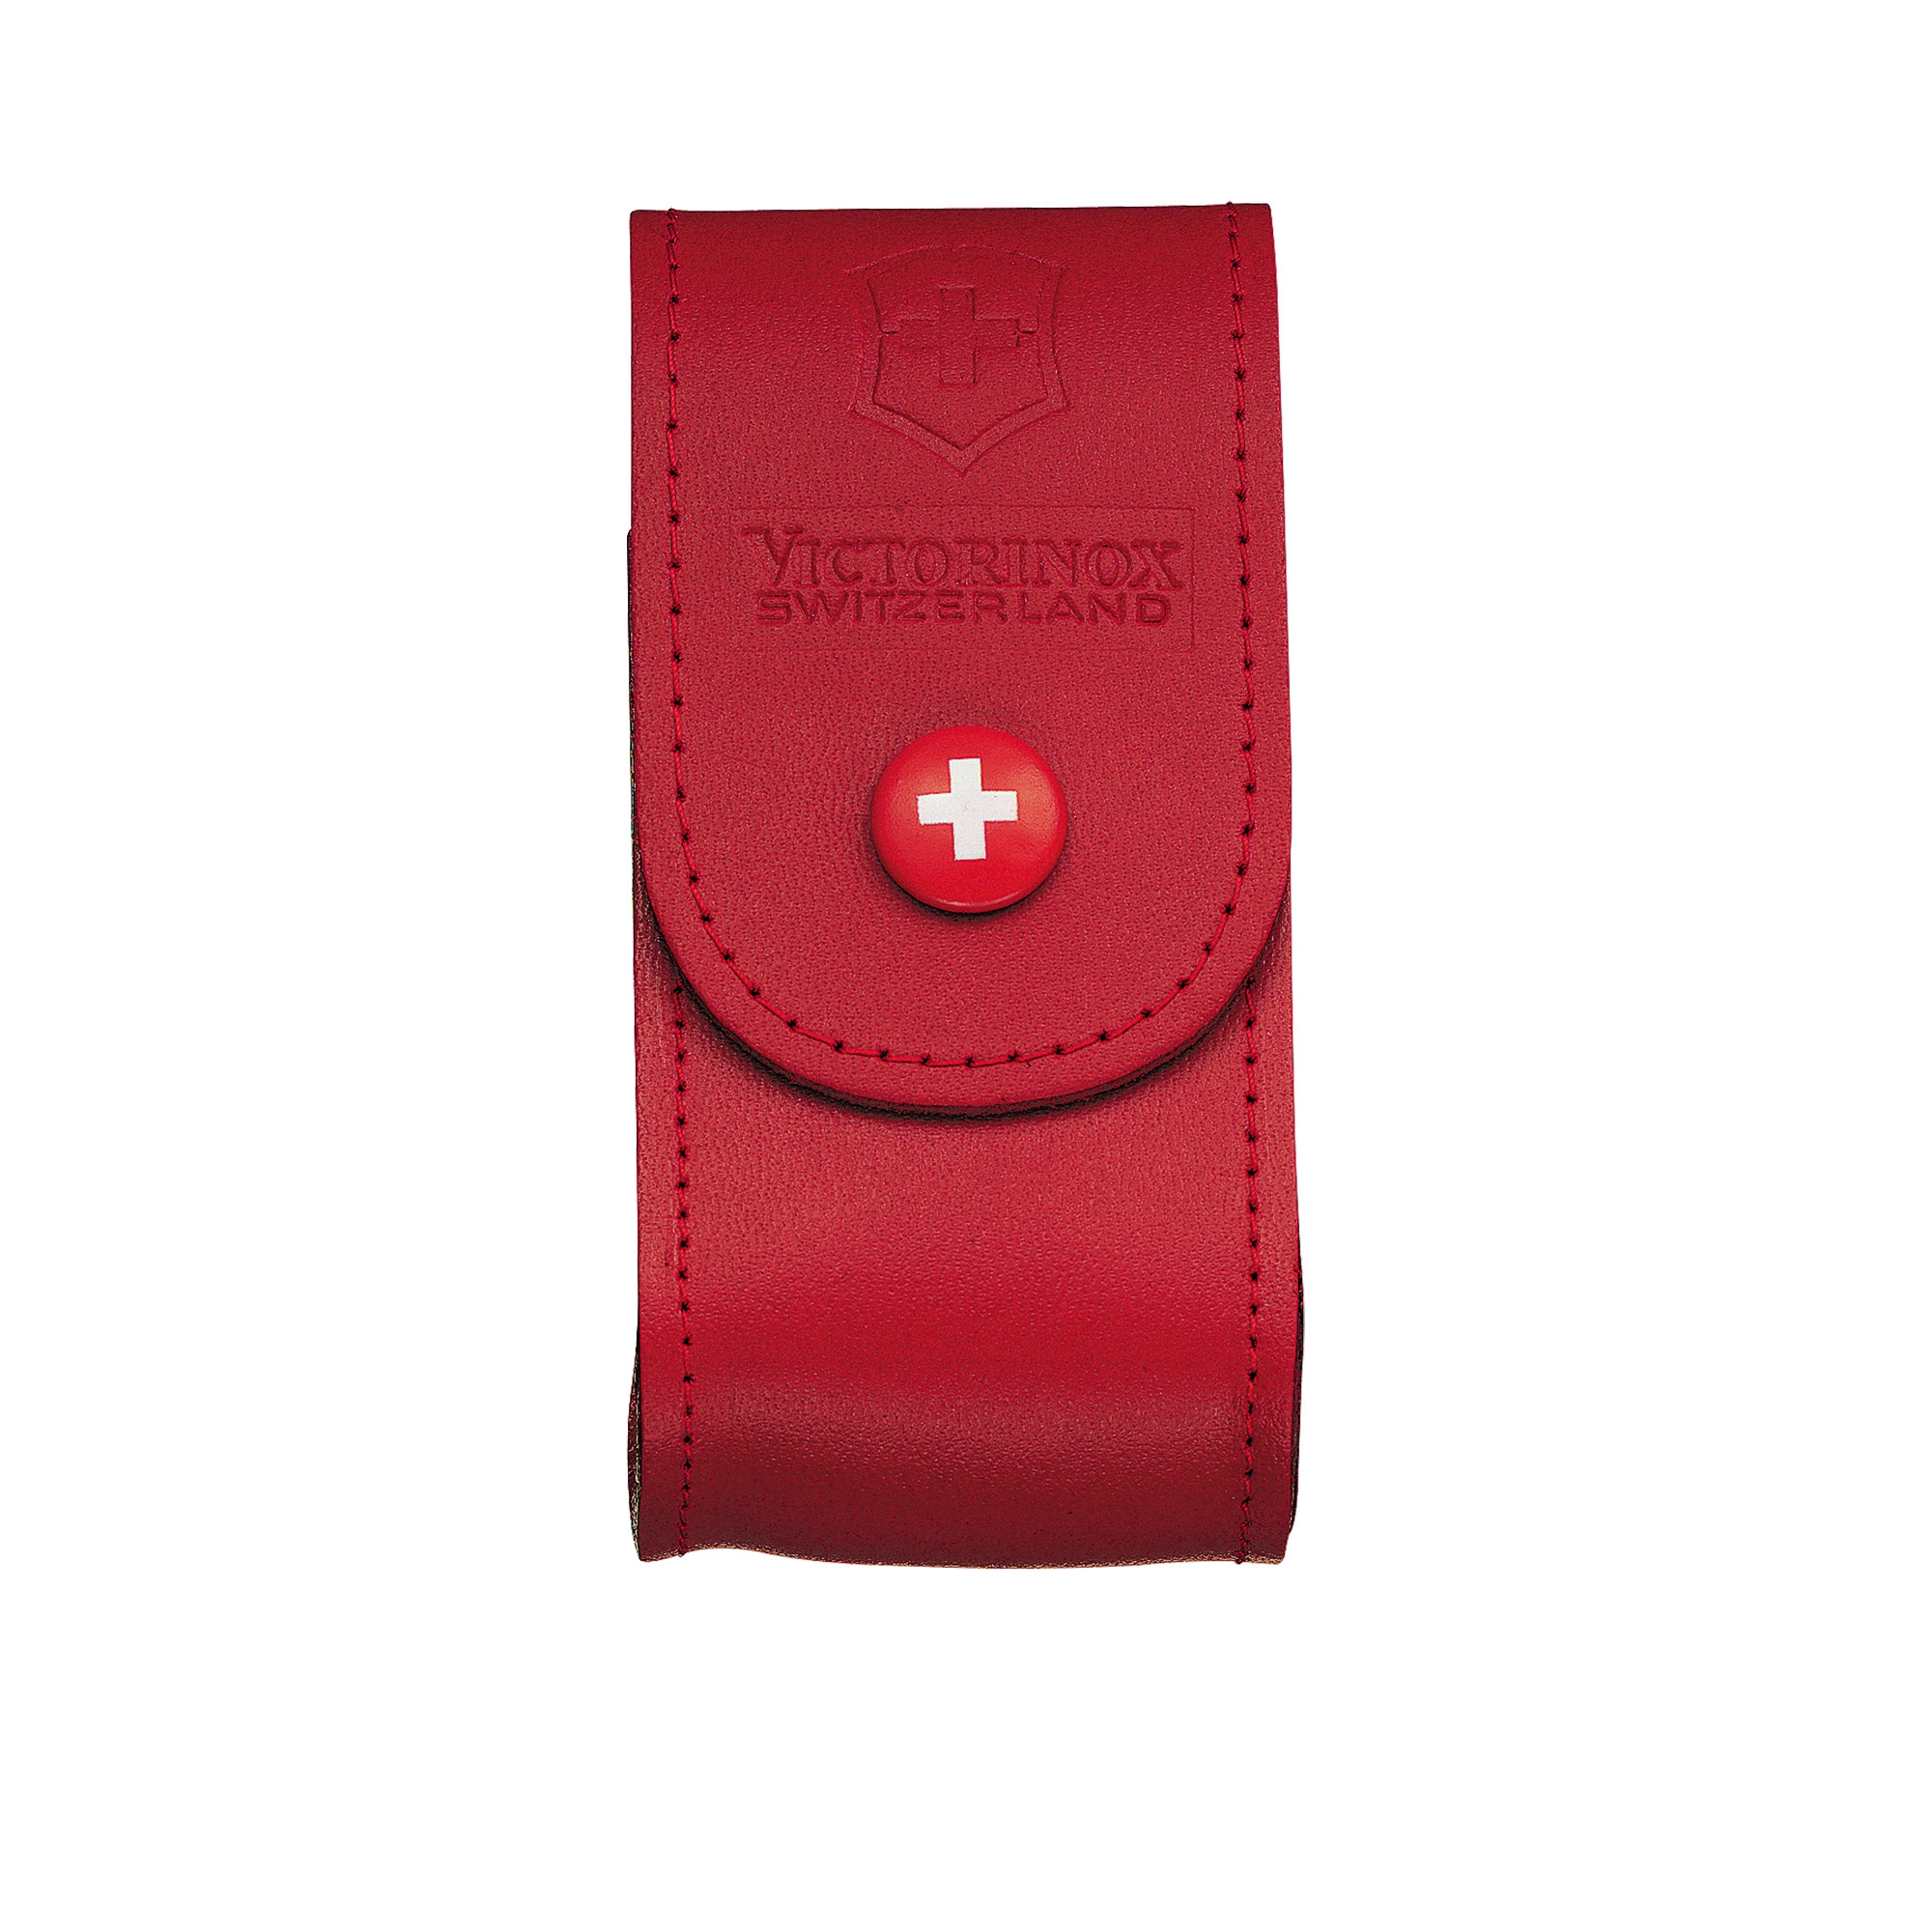 Victorinox Red Leather Sheath 5-8 Layers Image 1